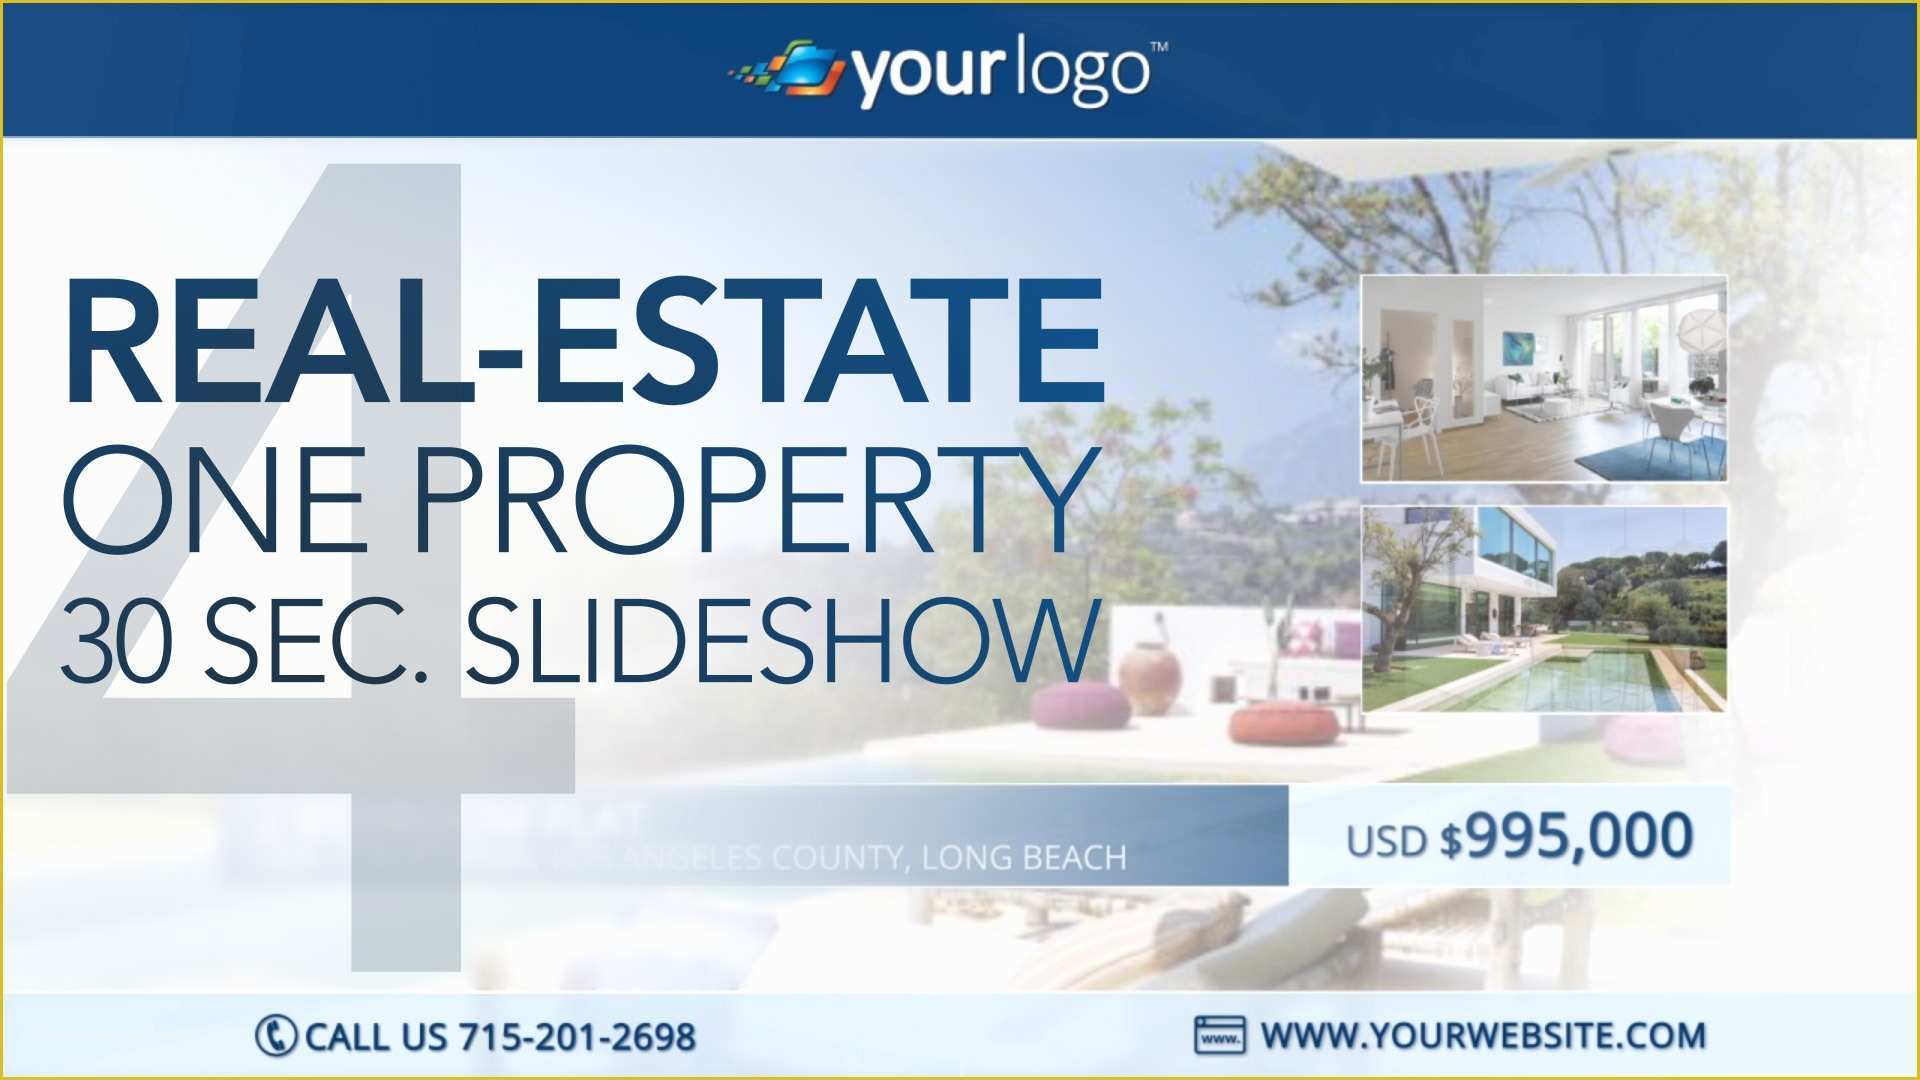 Final Cut Pro Photo Slideshow Template Free Of Real Estate E Property 30s Slideshow 4 Apple Motion 5